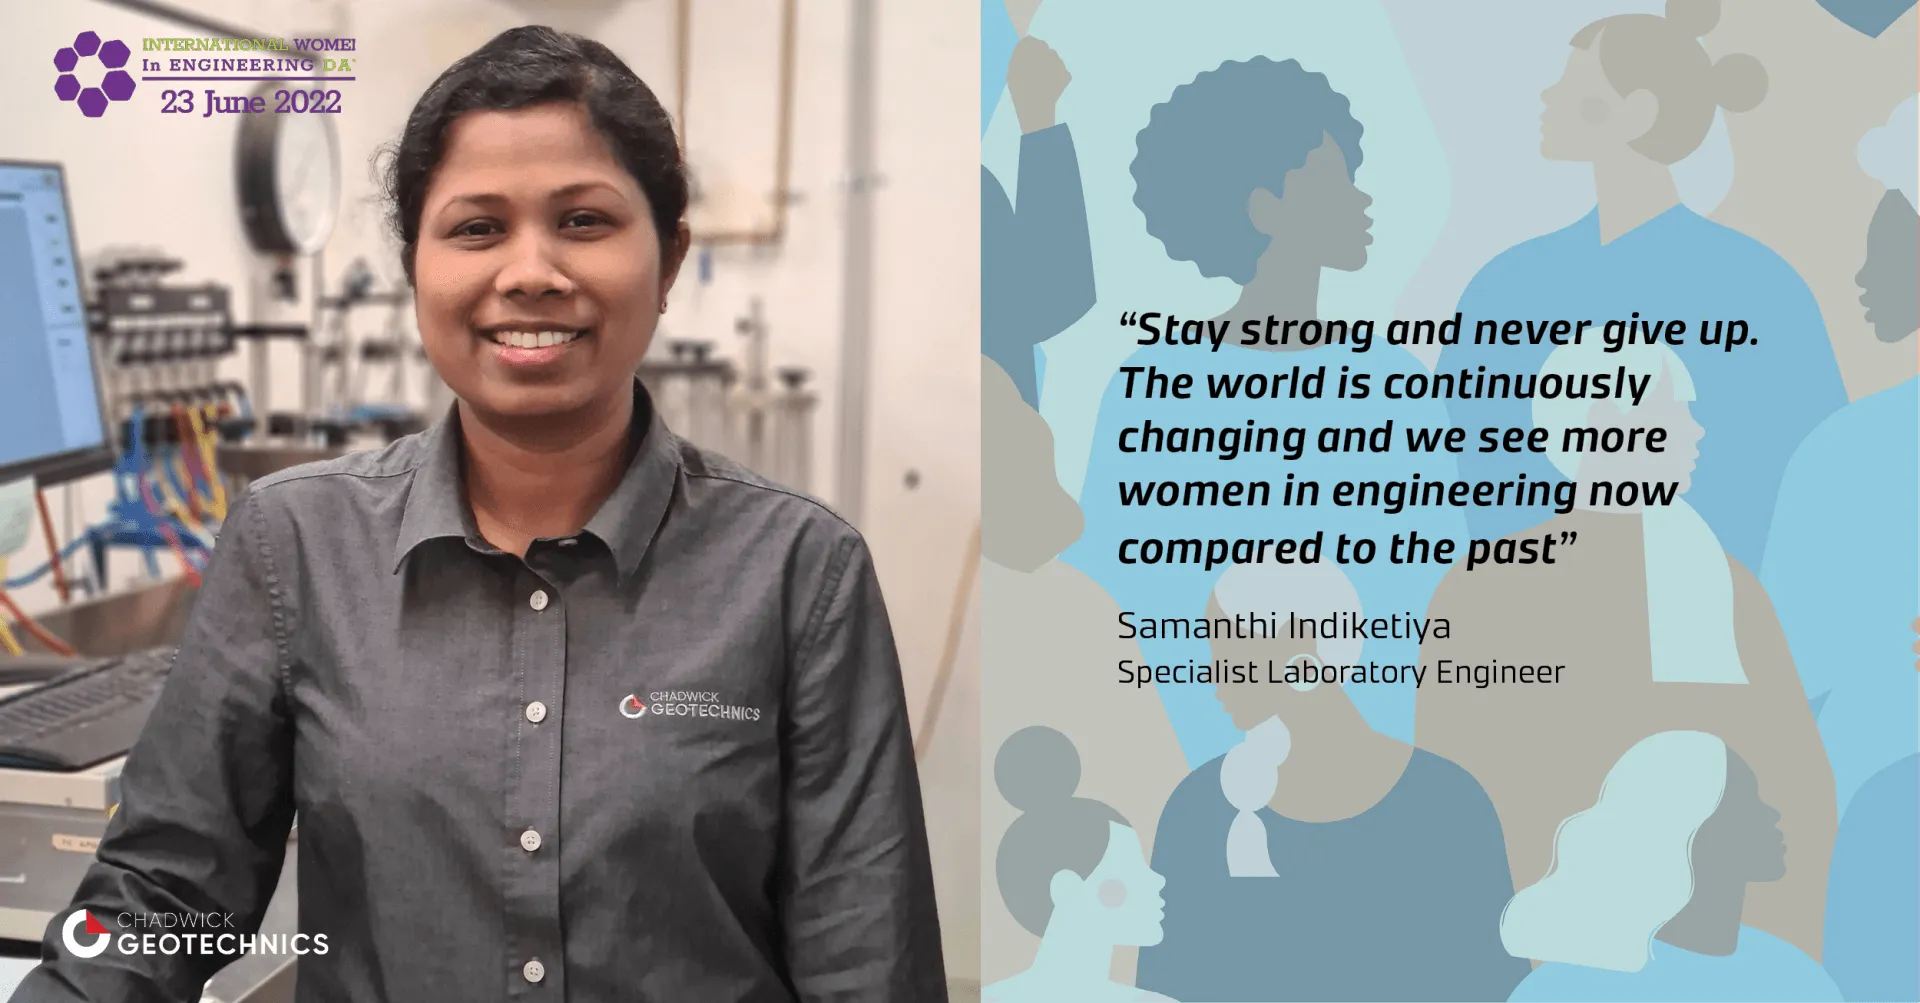 Women in Engineering Day